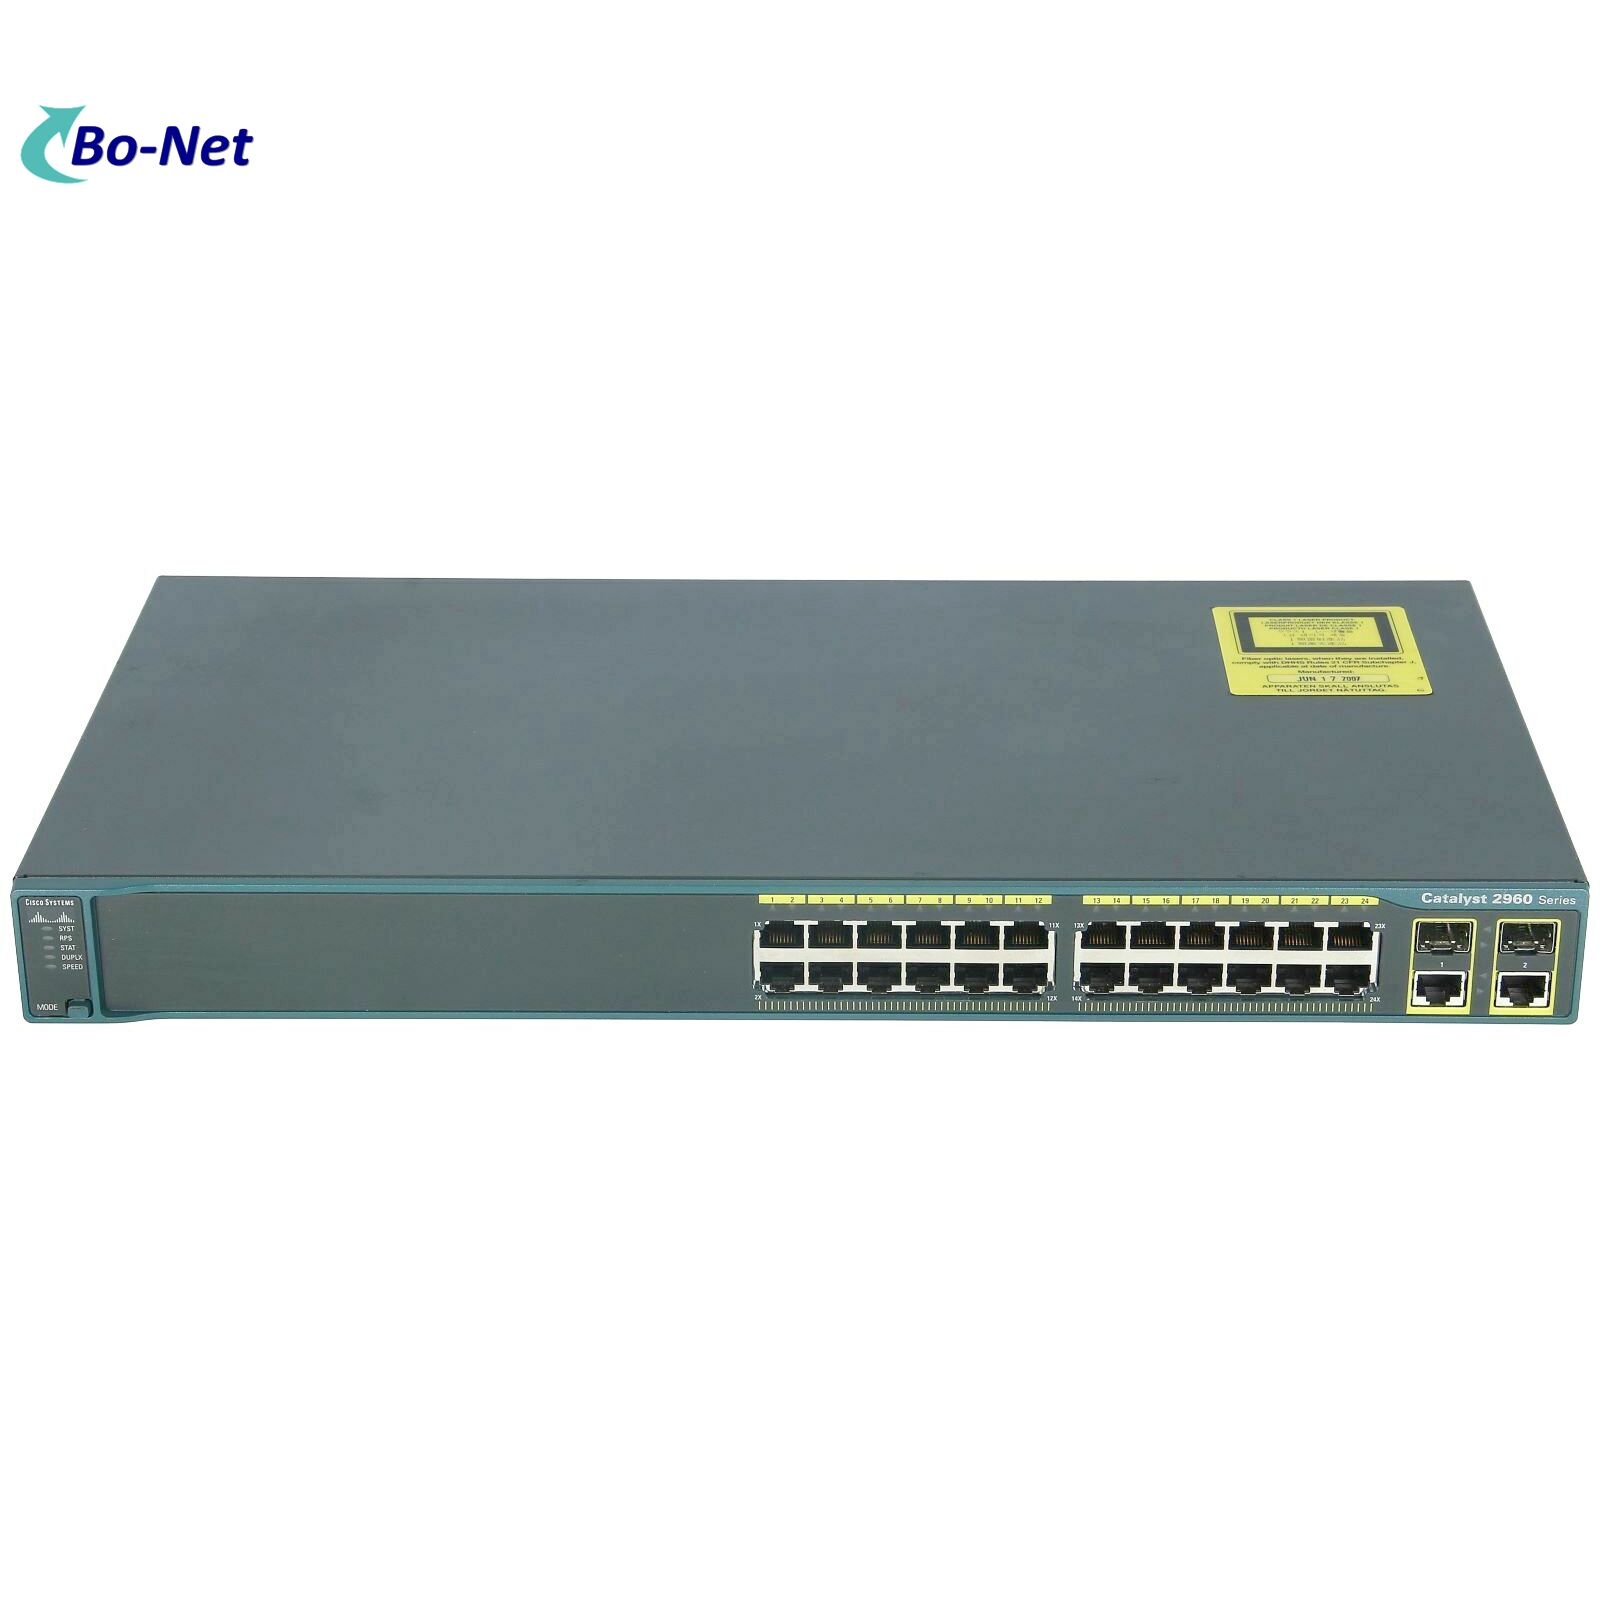 CISCO WS-C2960-24TC-L 24port 10/100M Switch managed network switch C2960 series 